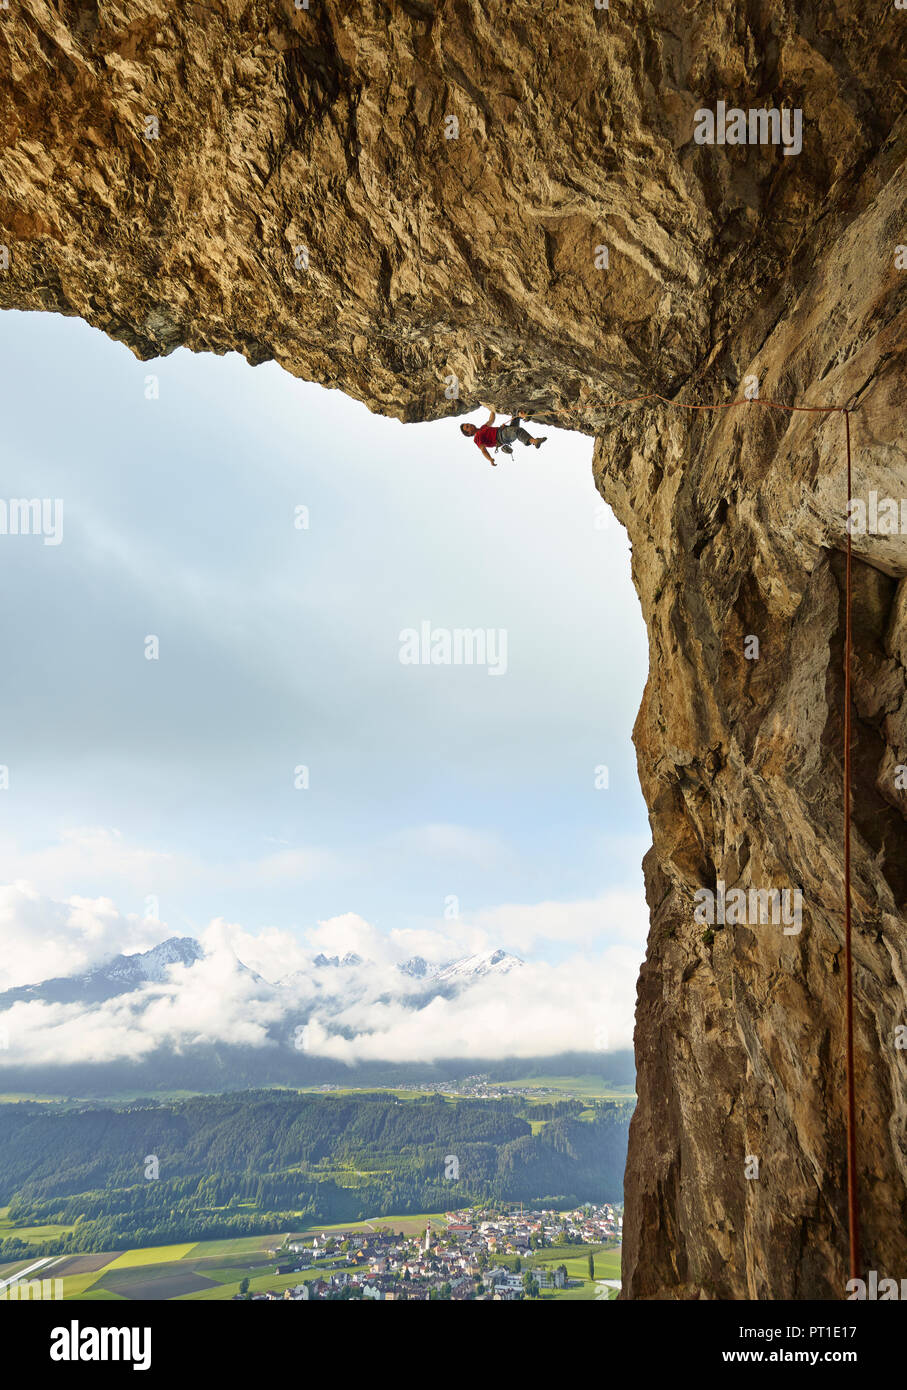 Austria, Innsbruck, Martinswand, man climbing in grotto Stock Photo